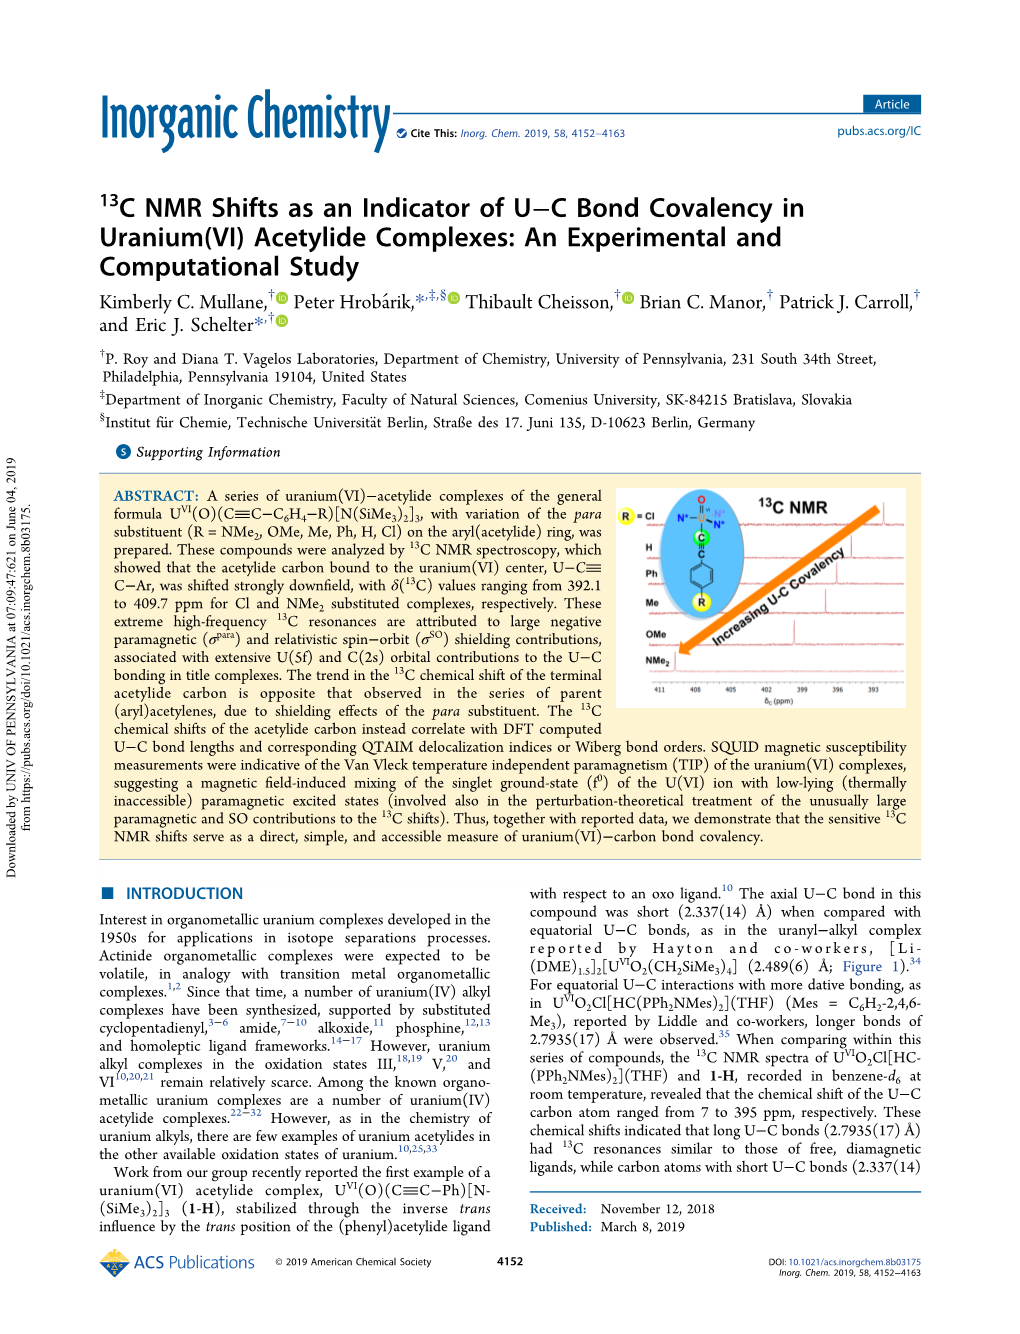 13C NMR Shifts As an Indicator of U–C Bond Covalency in Uranium(VI)